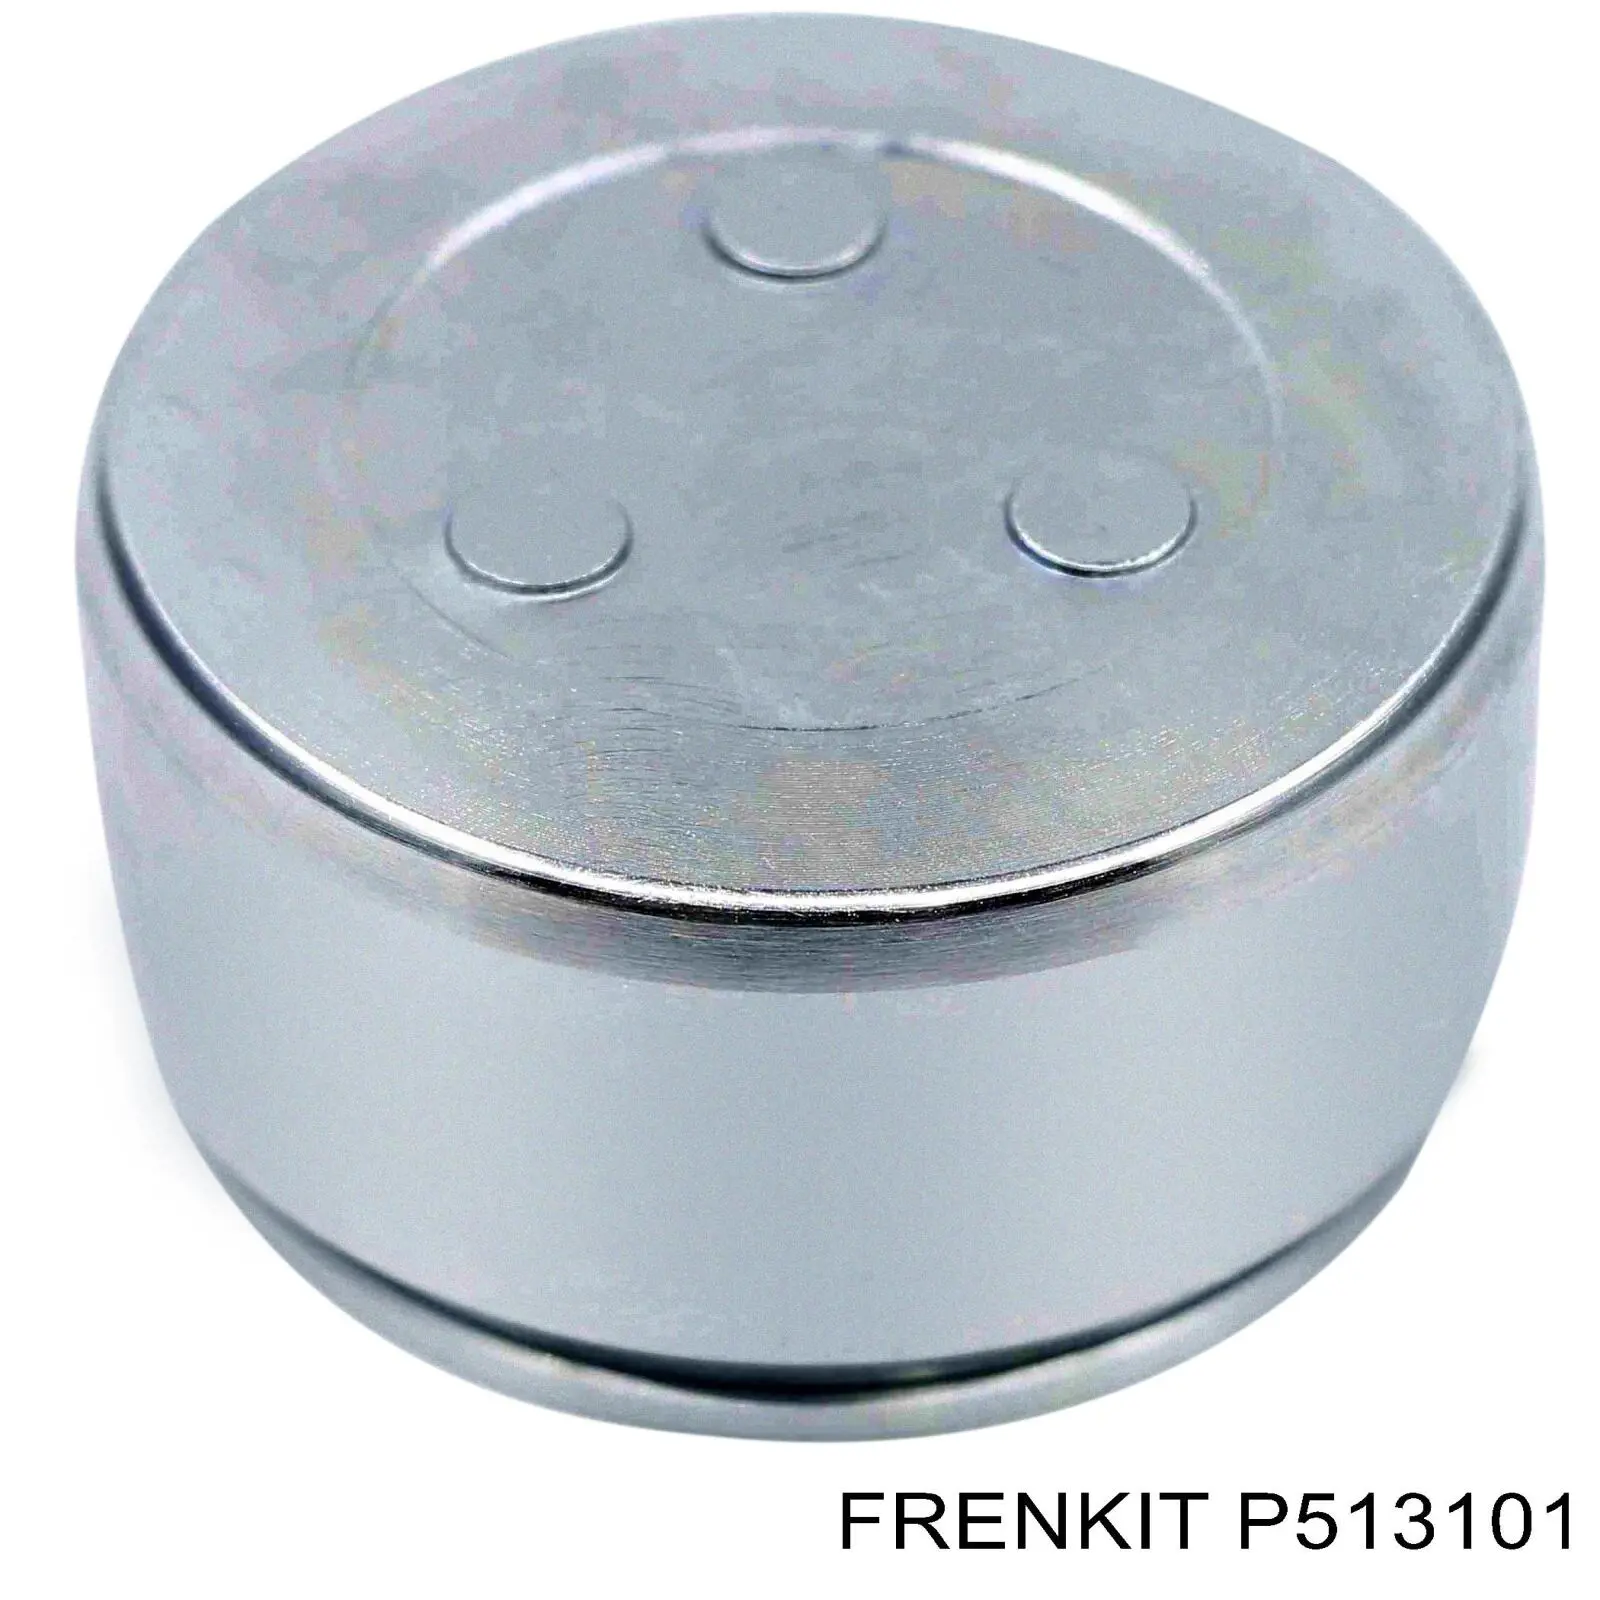 P513101 Frenkit émbolo, pinza del freno delantera